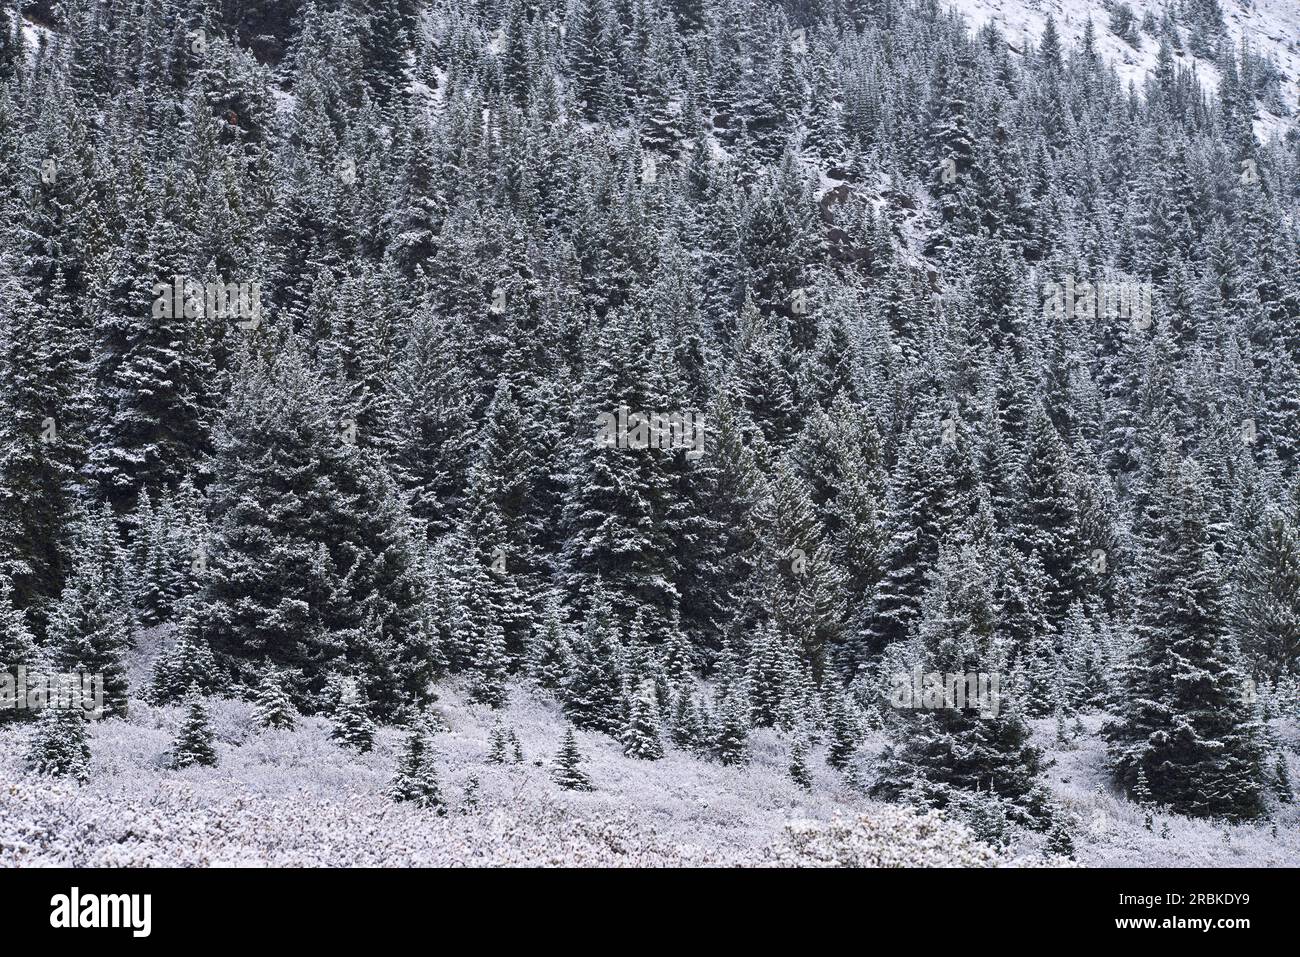 Winter views of Jasper National Park, Alberta, Canada Stock Photo